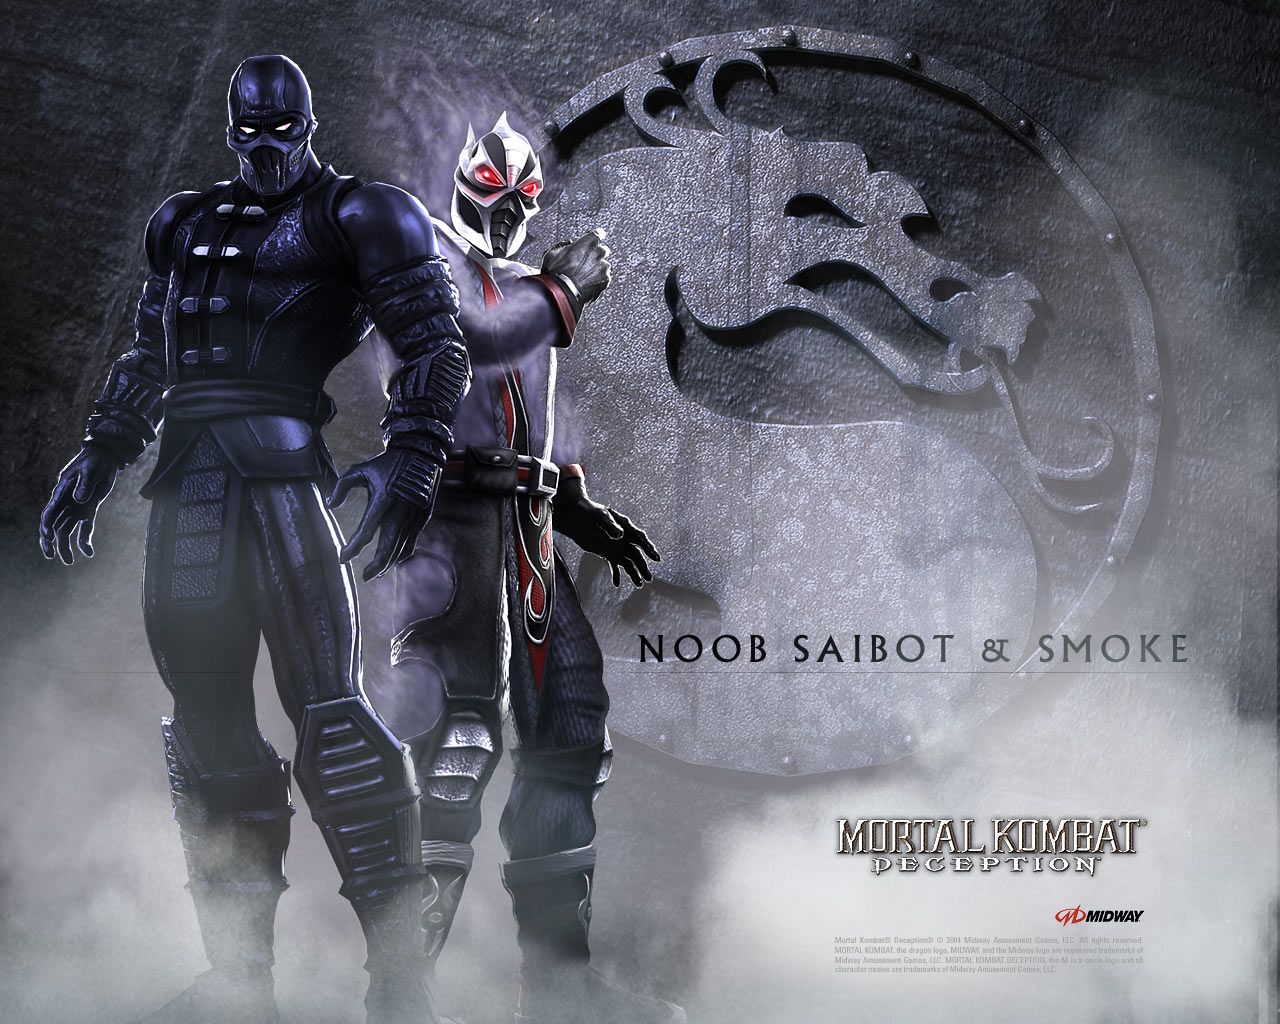 Noob Saibot, Smoke Mortal Kombat: Deception picture. Mortal kombat, Noob saibot, Mortal kombat x wallpaper